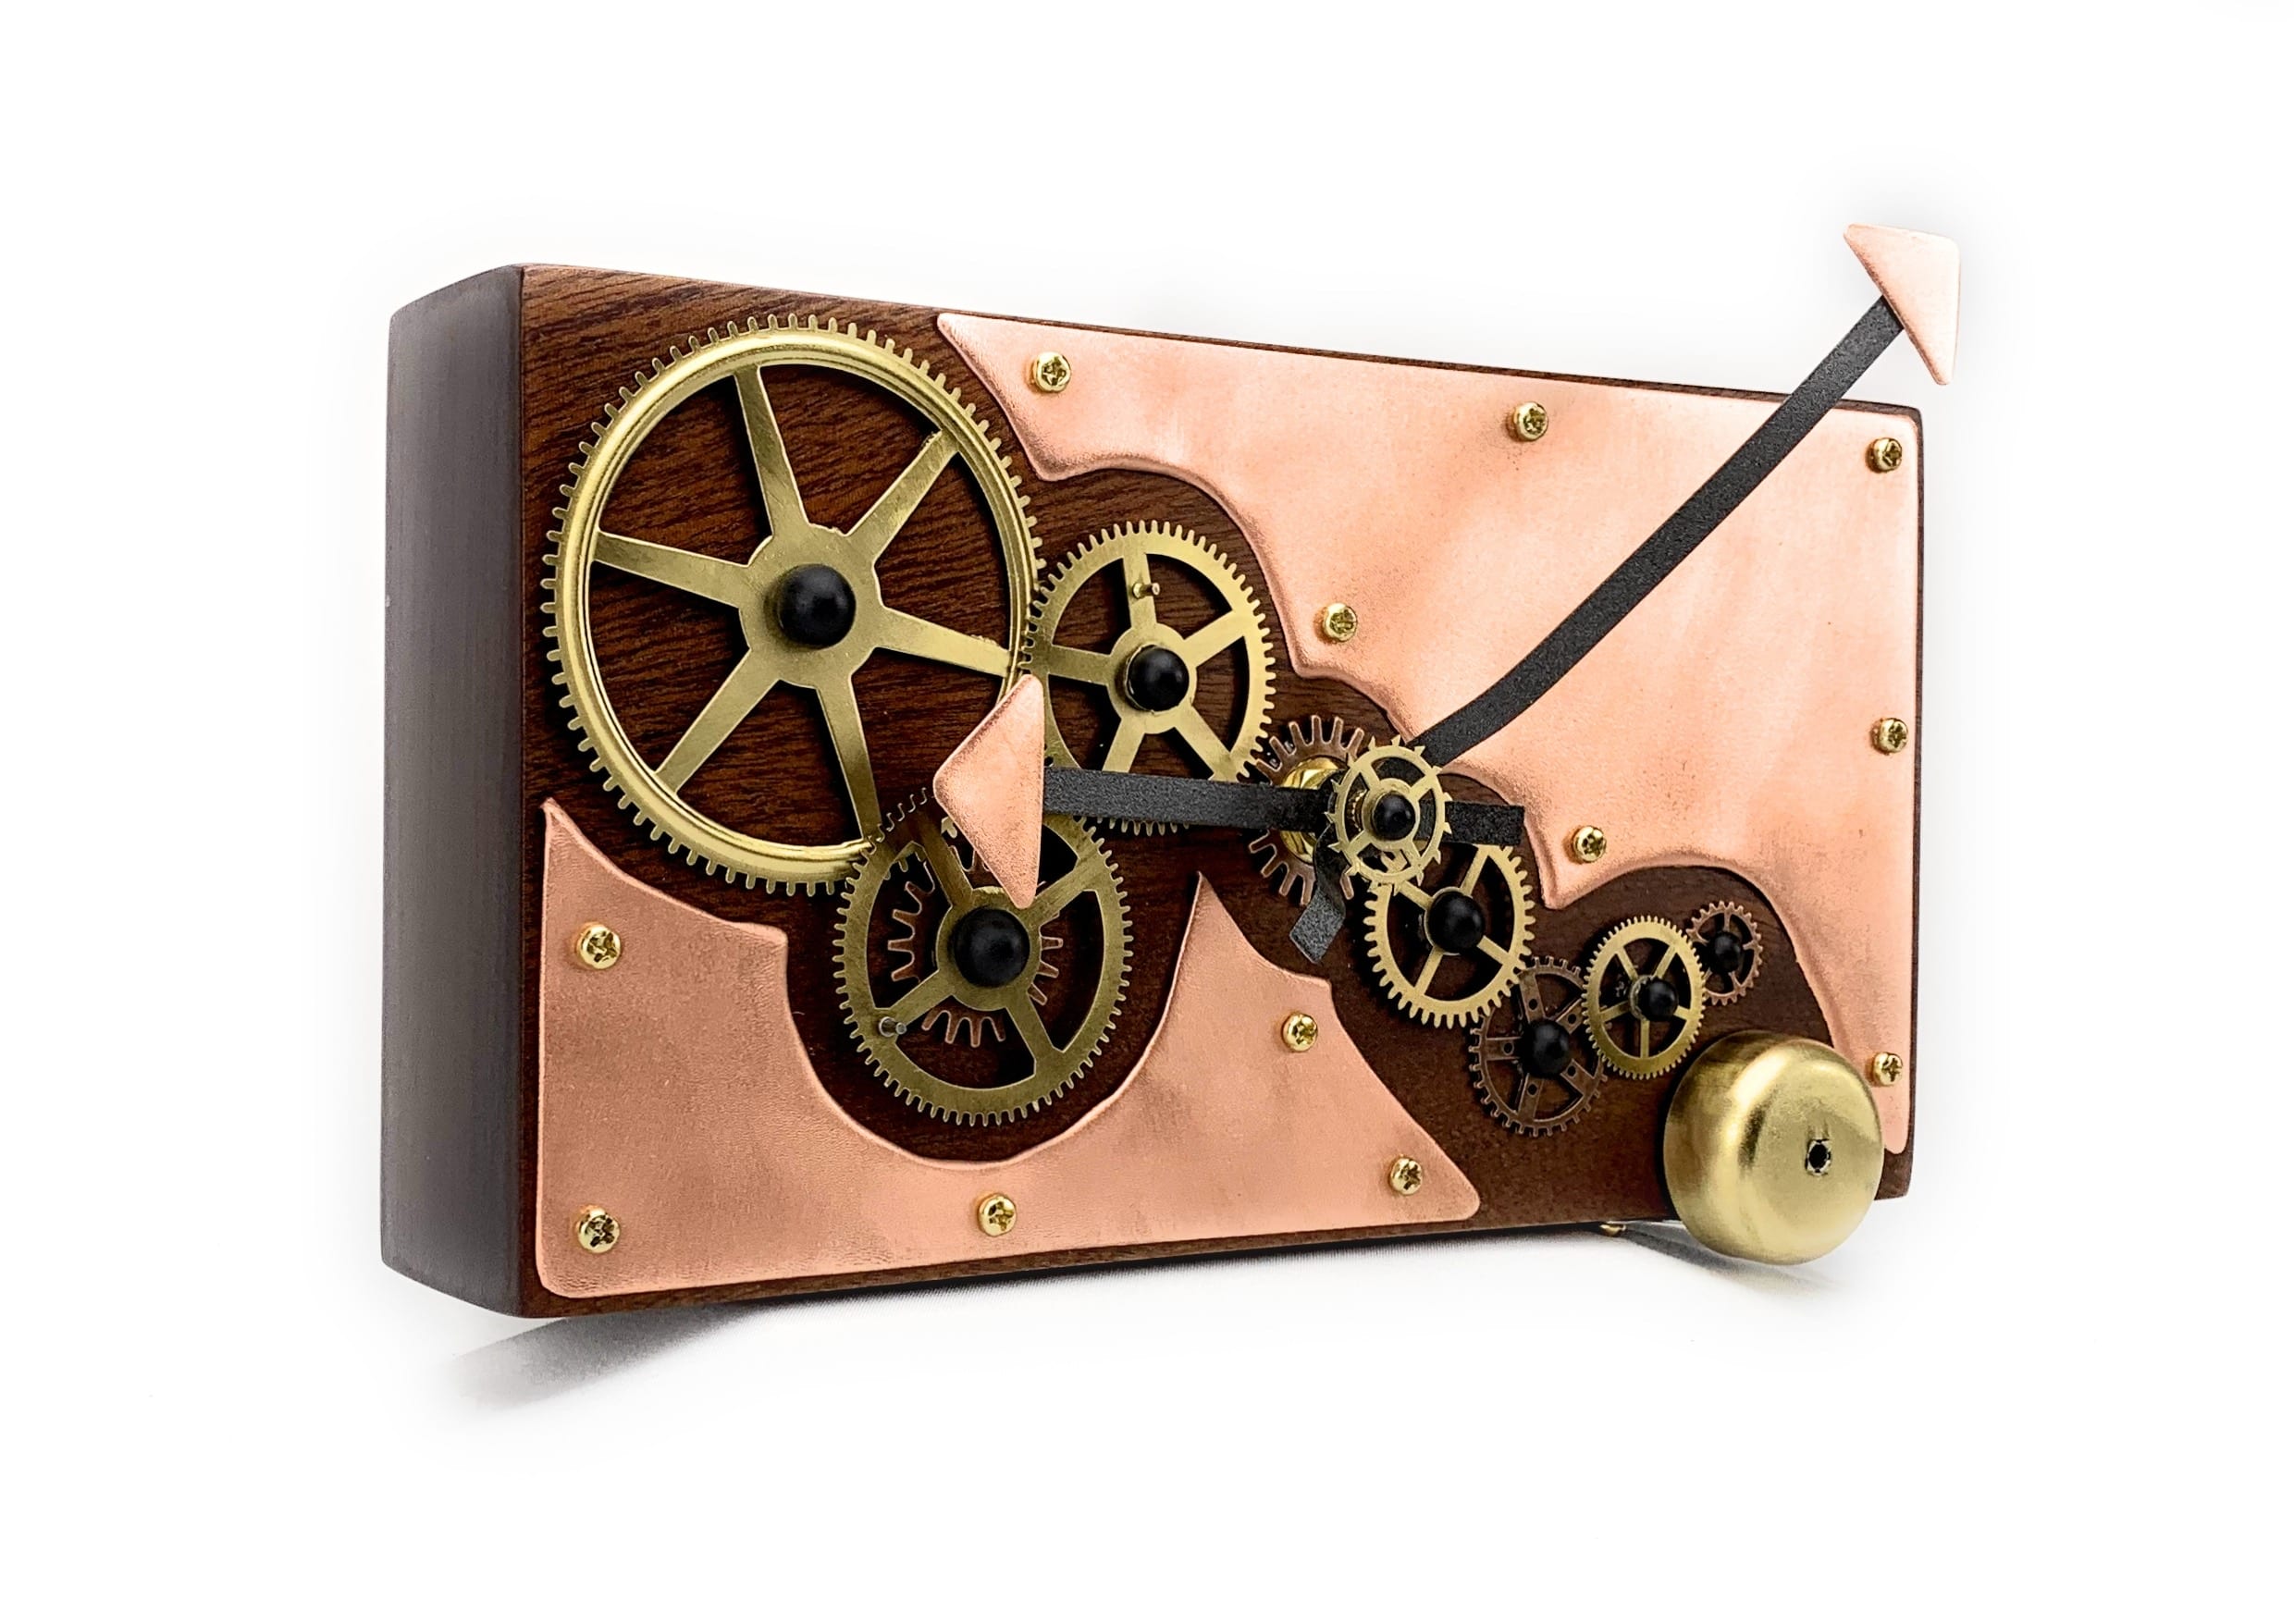 KingWood Reclaimed Cedar Slab Wall Clock with Brass Gears, "Polished"